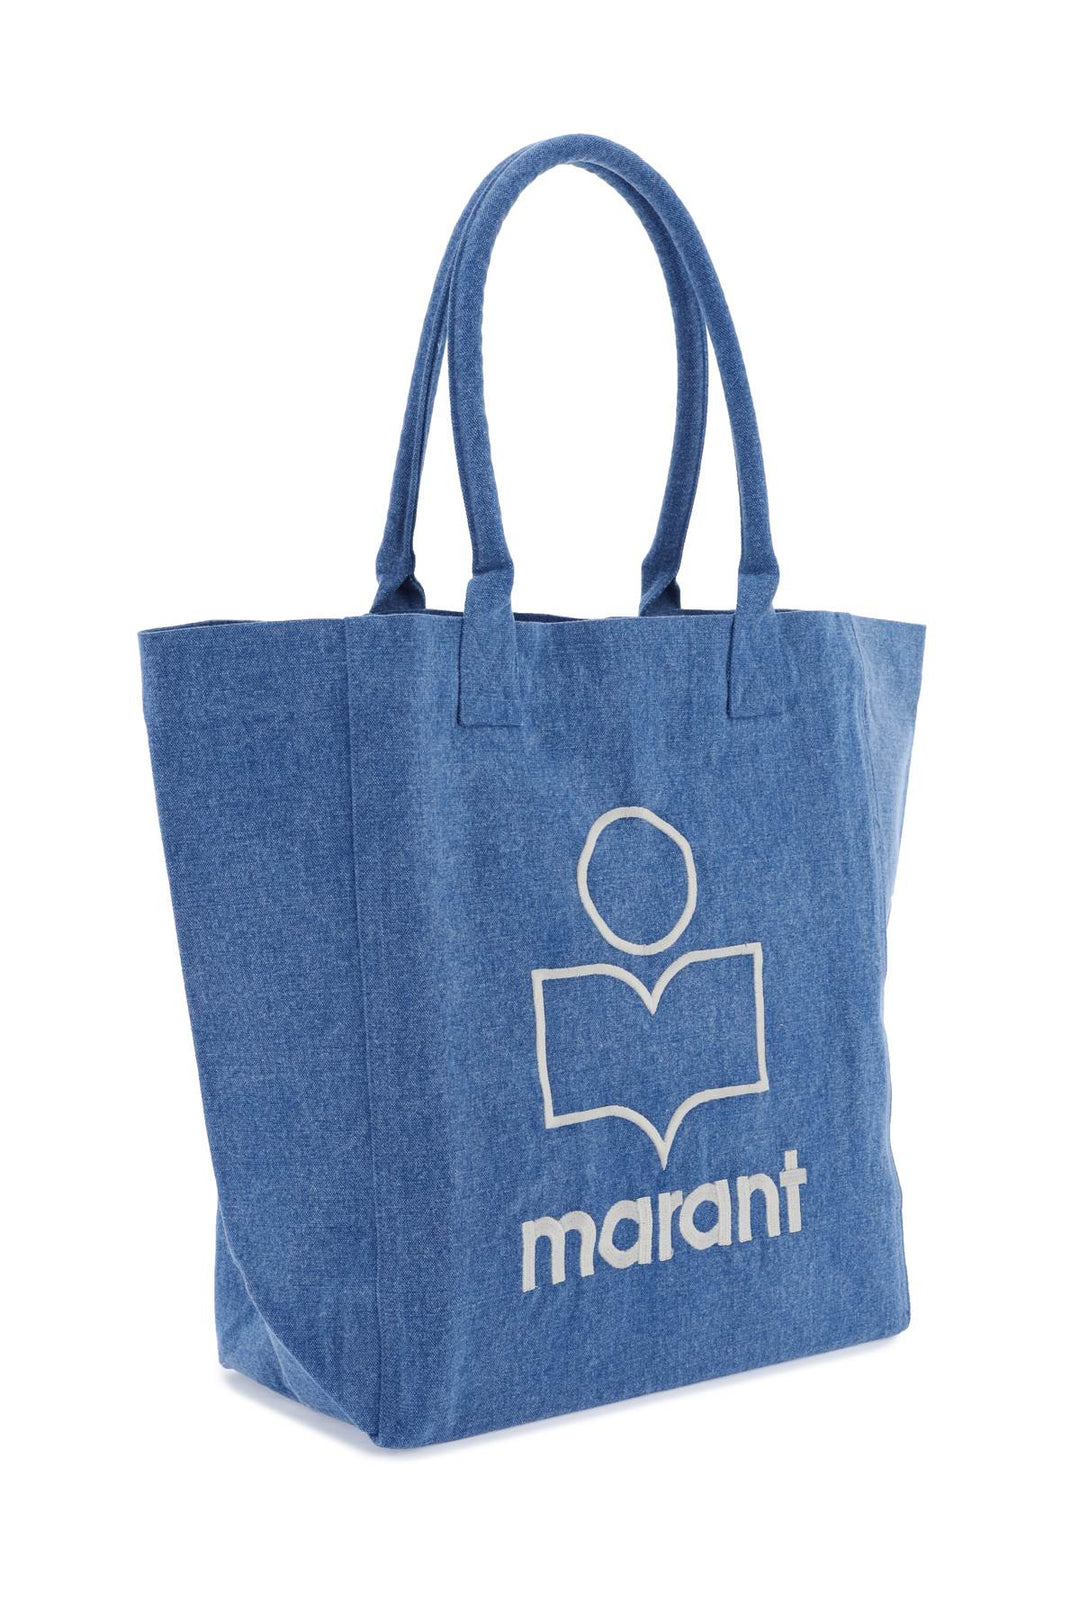 Isabel Marant Logo Yenky Tote Bag   Blue